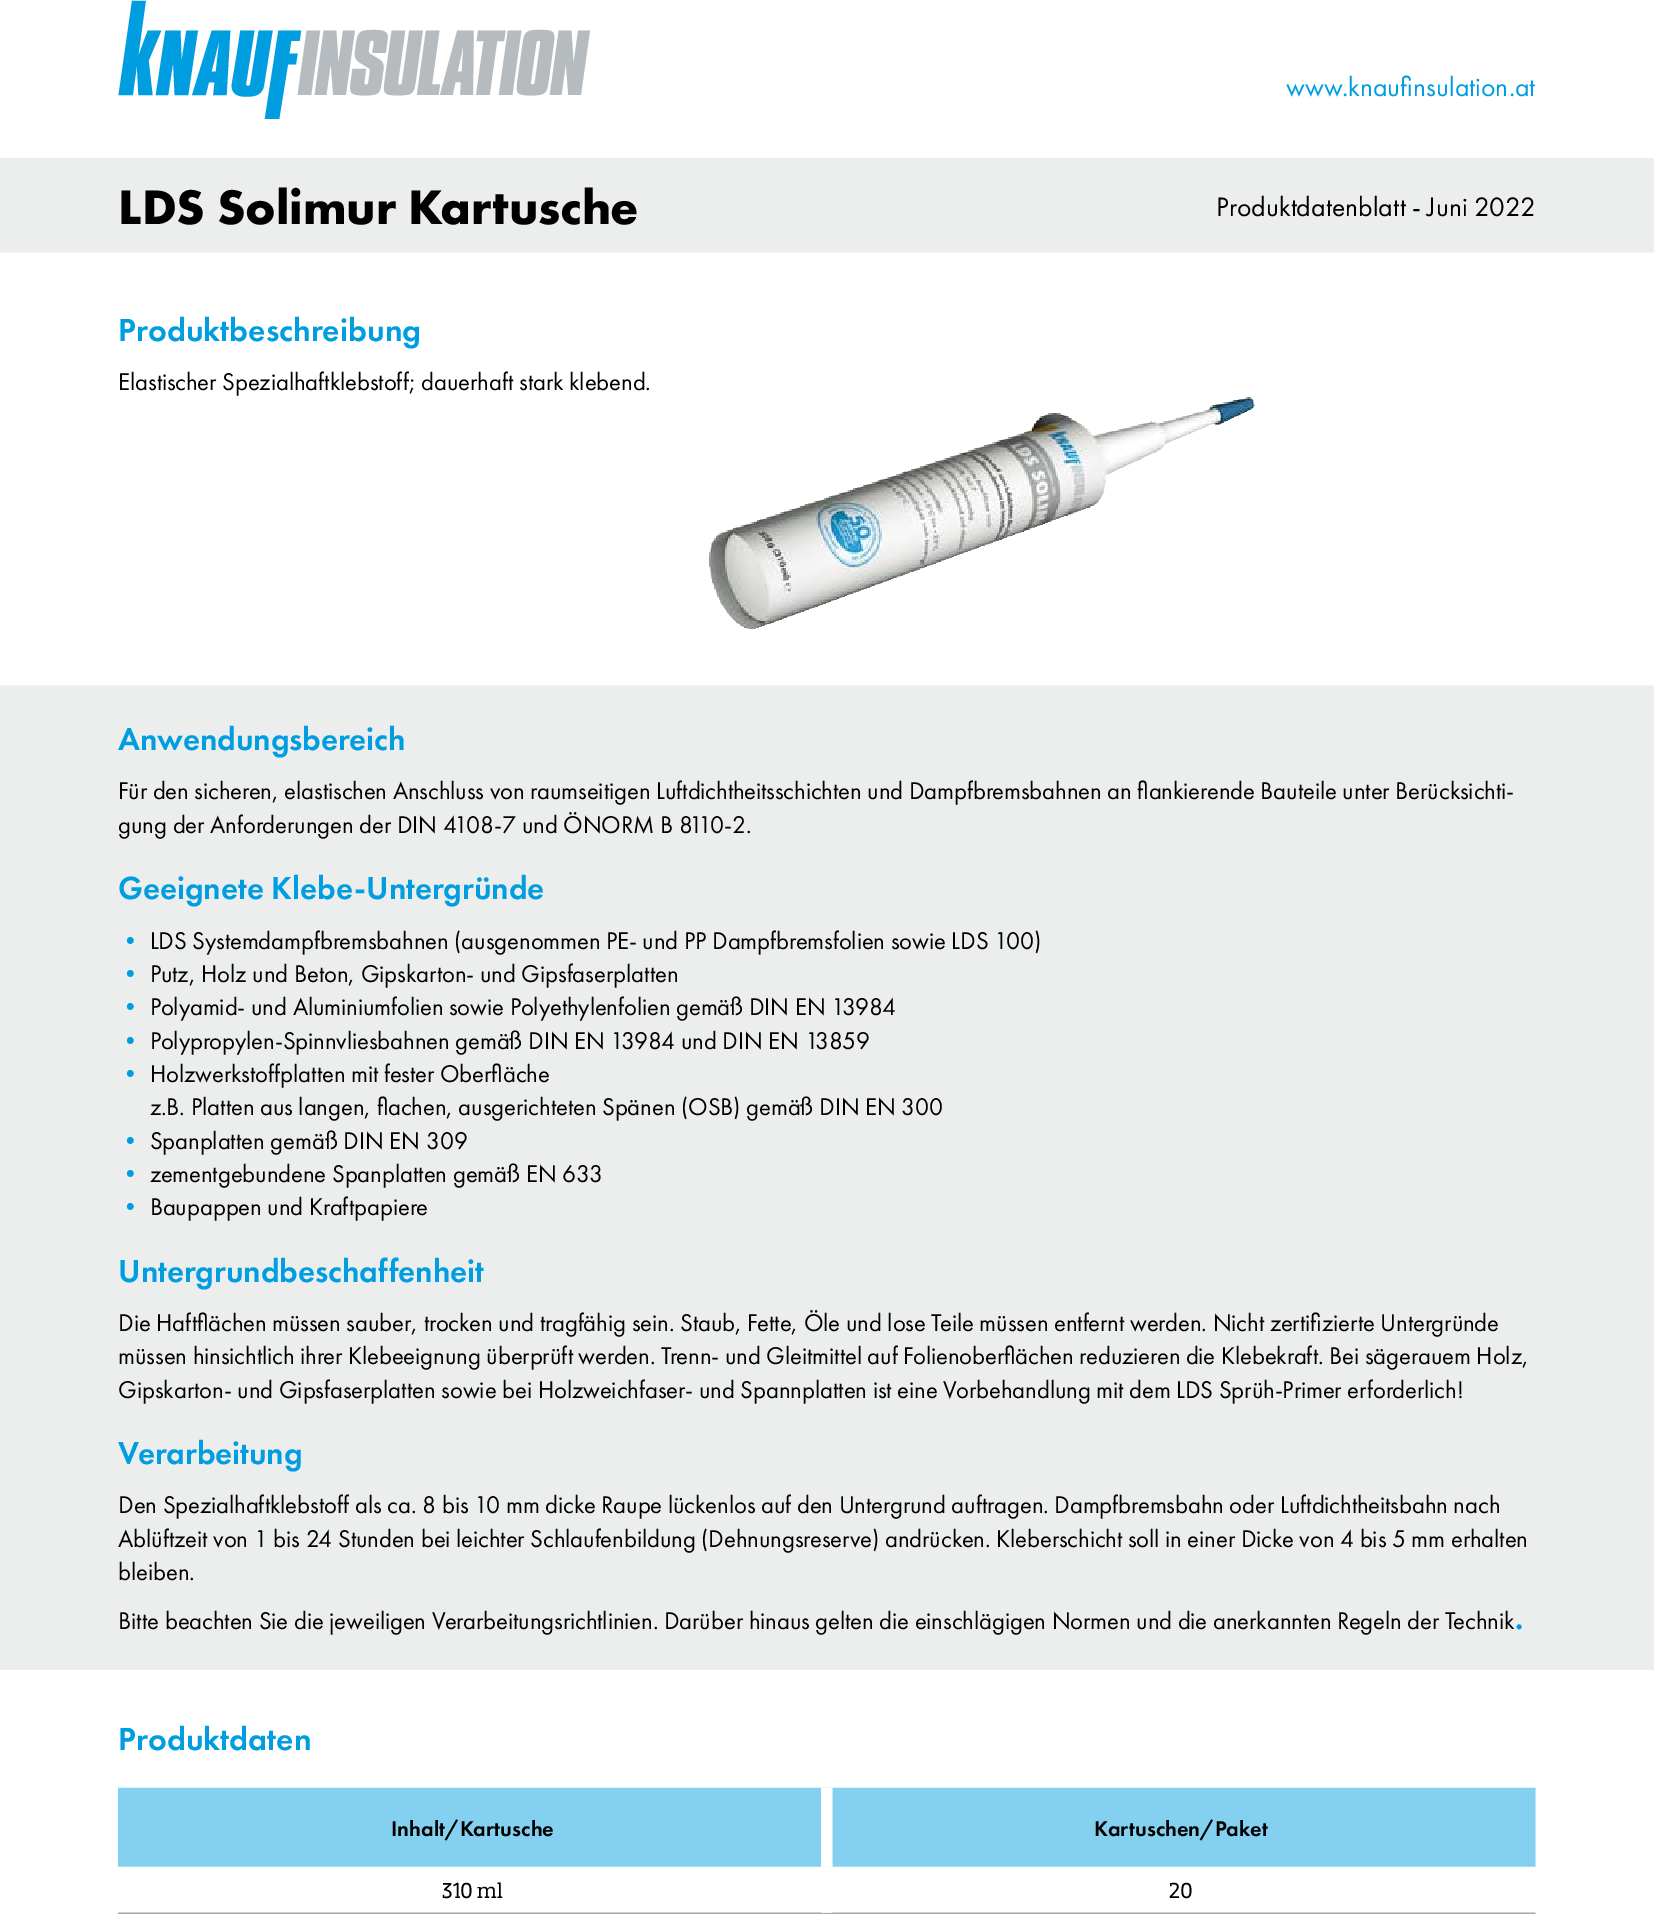 LDS Solimur, Produktdatenblatt